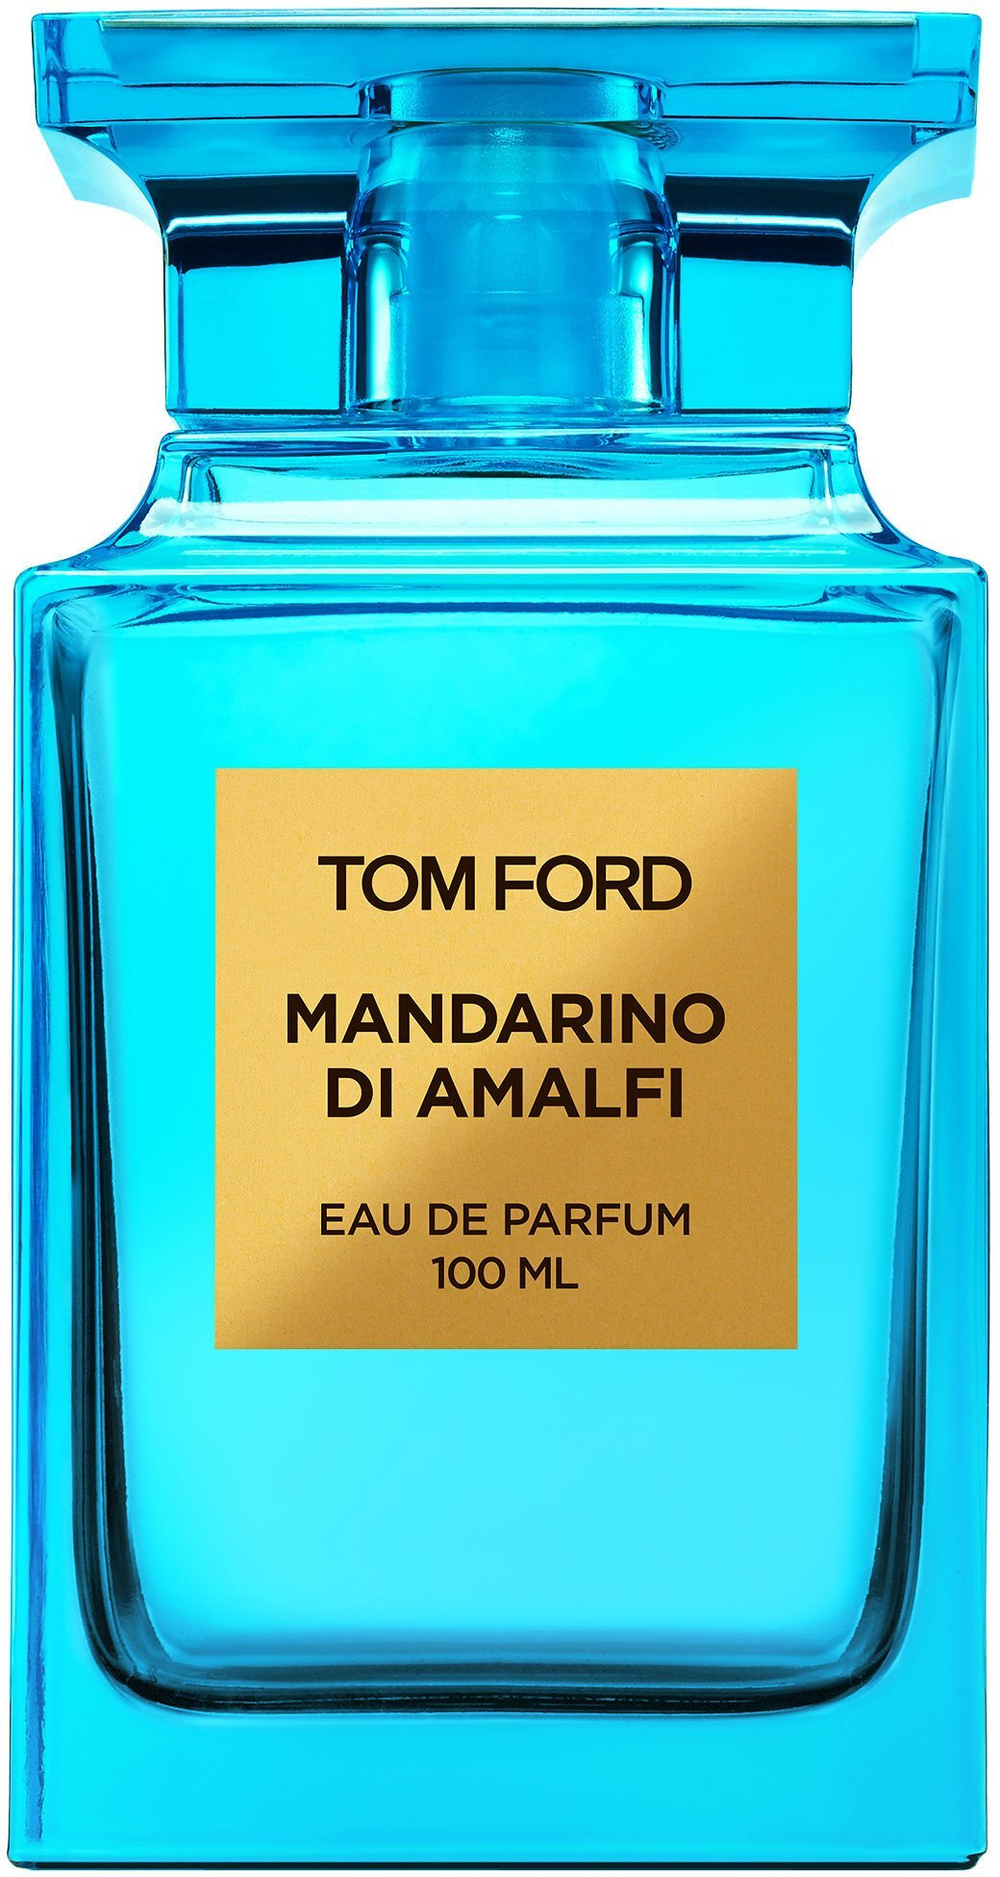 TOM FORD MANDARINO DI AMALFI